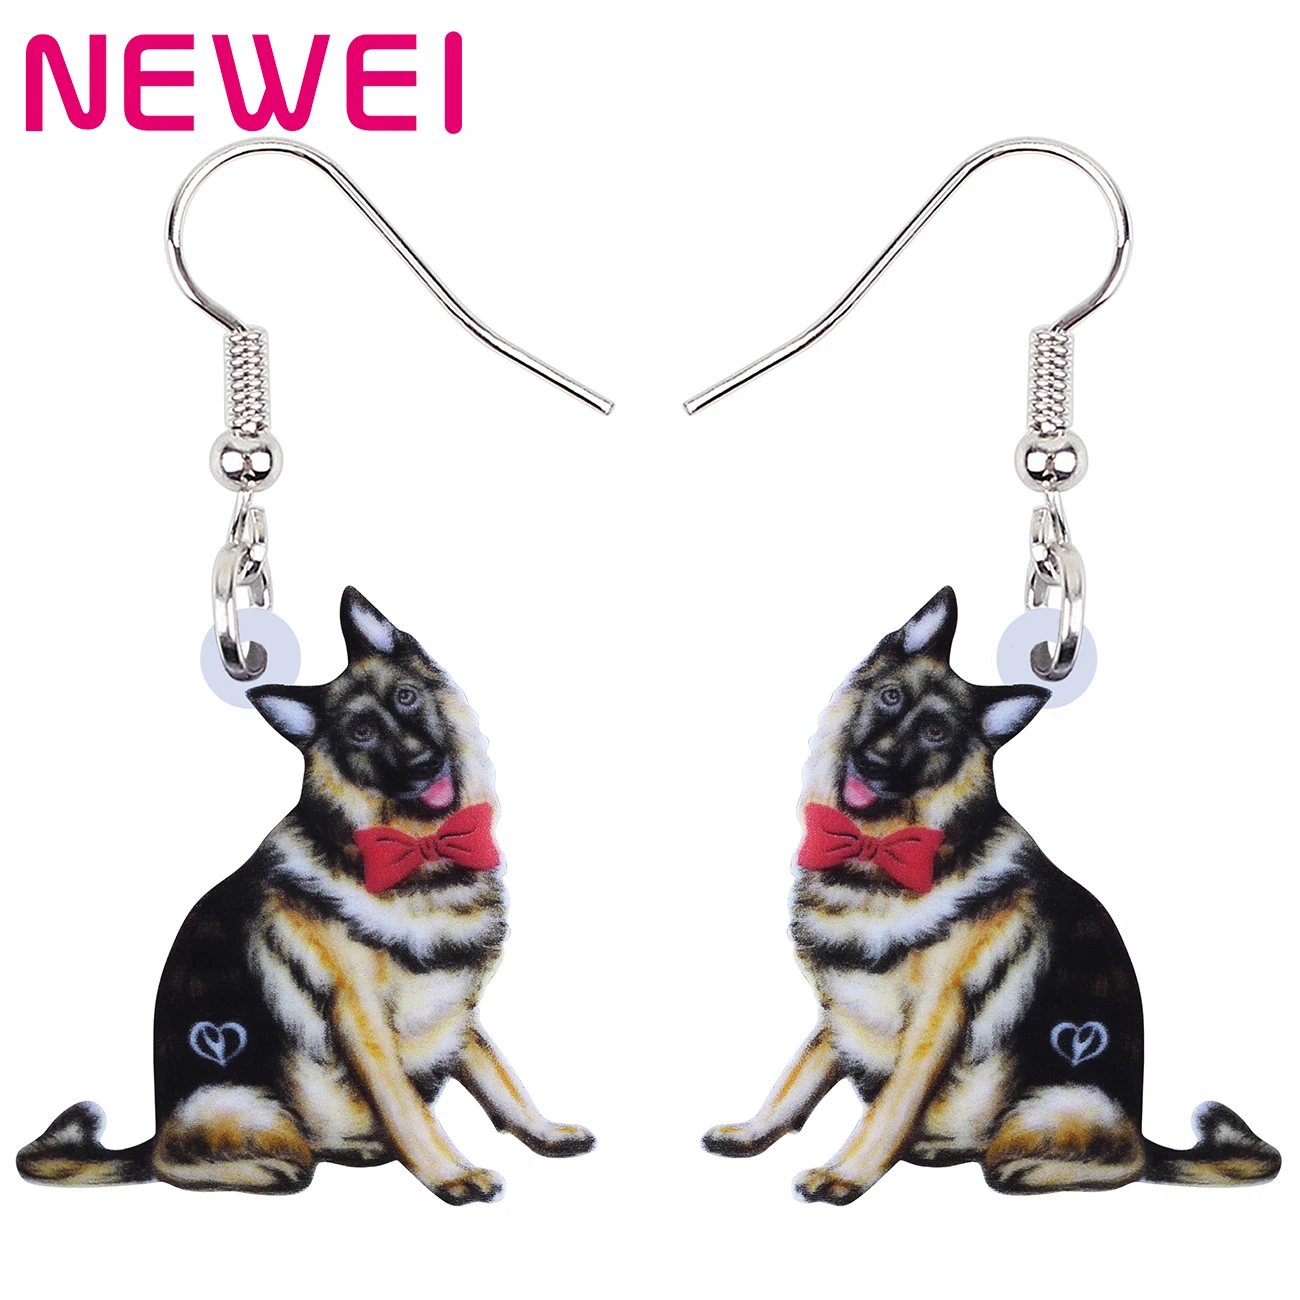 

Acrylic Bowknot Sweet German Shepherd Dog Earrings Pets Drop Dangle Fashion Jewelry For Women Girls Kids Teens Charms Gifts, Brown